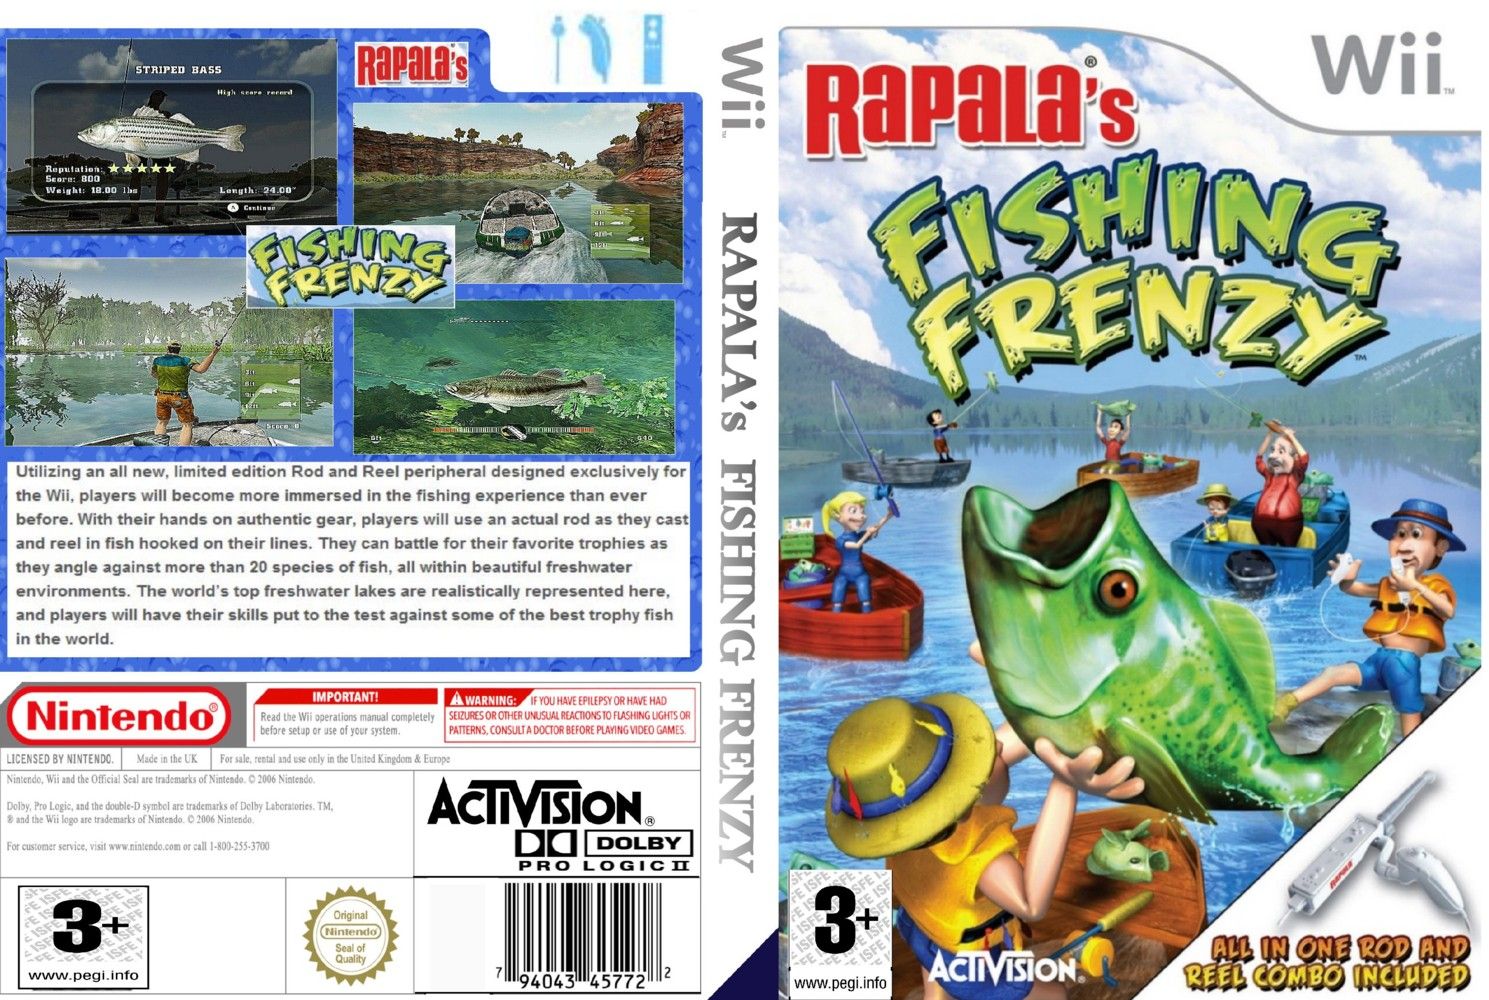 https://www.covercentury.com/covers/wii/r/Rapalas-Fishing-Frenzy-PAL-Wii-FULL.jpg